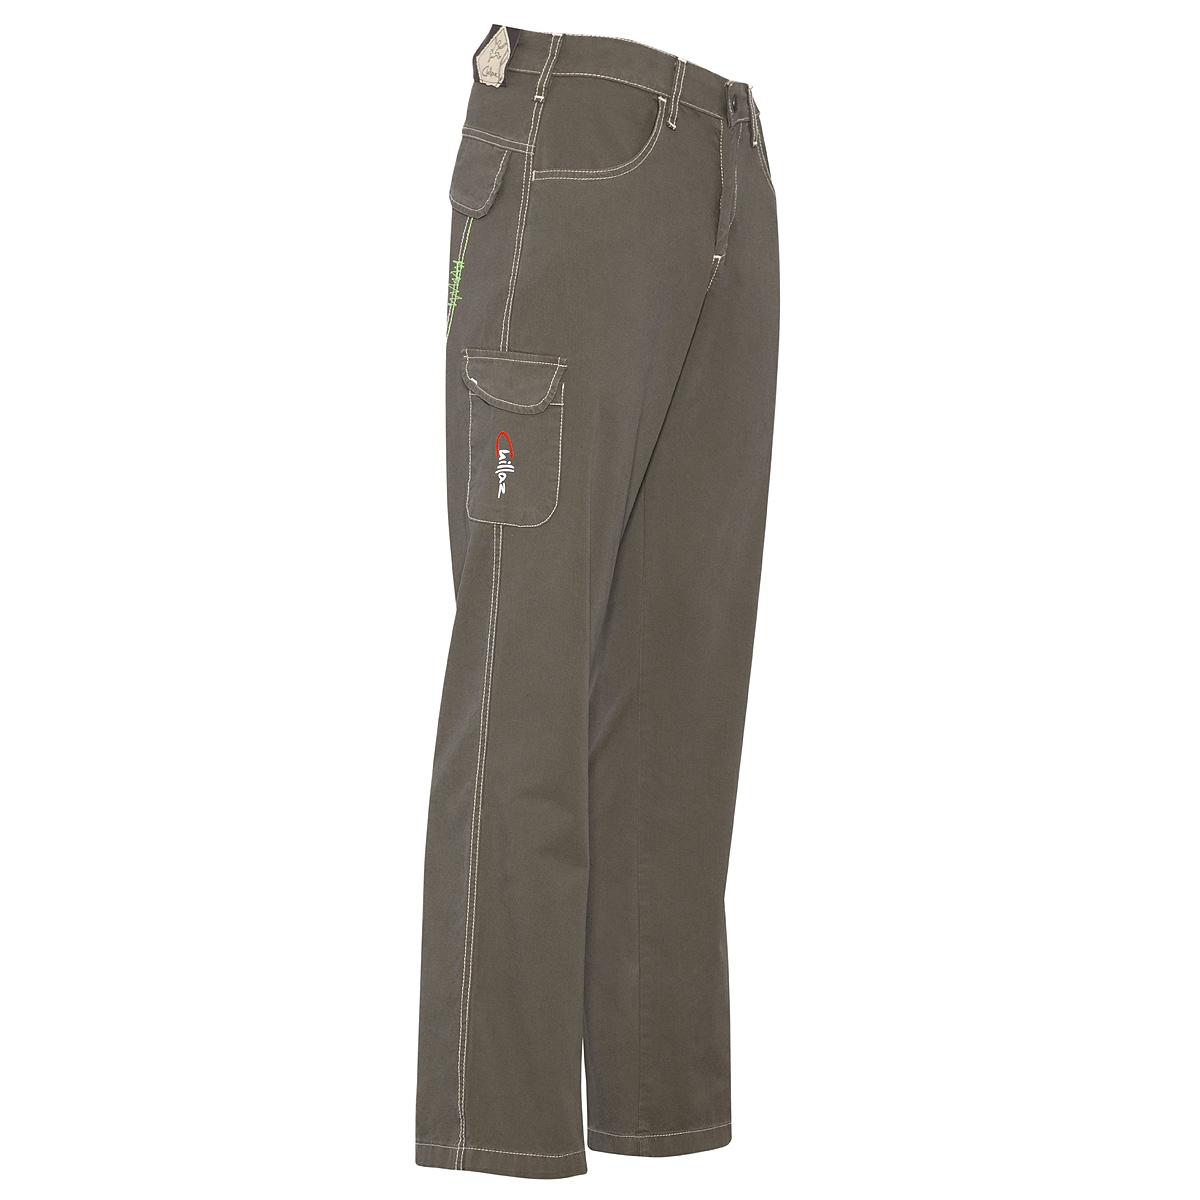 Foto Pantalones largos Chillaz Flagstaff verde para hombre , s